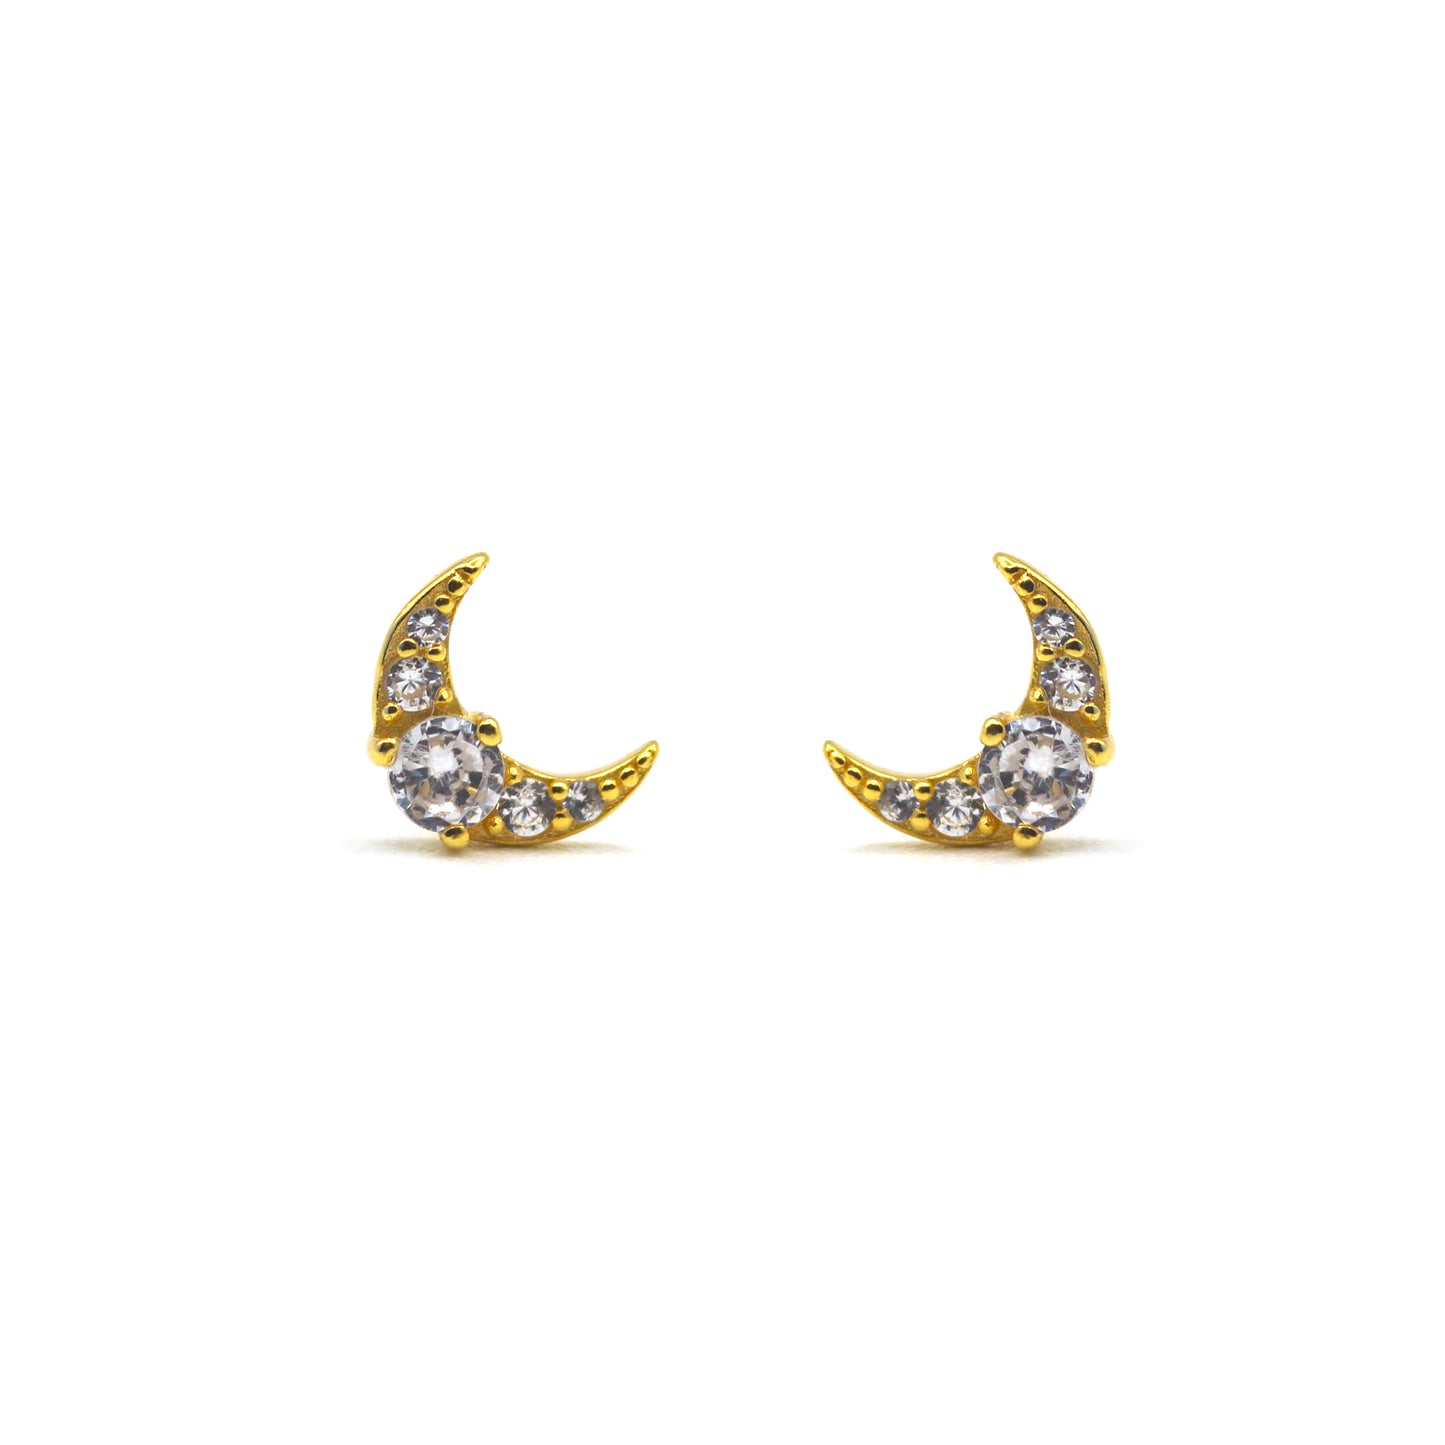 Shiny Cresent Moon Silver Earrings